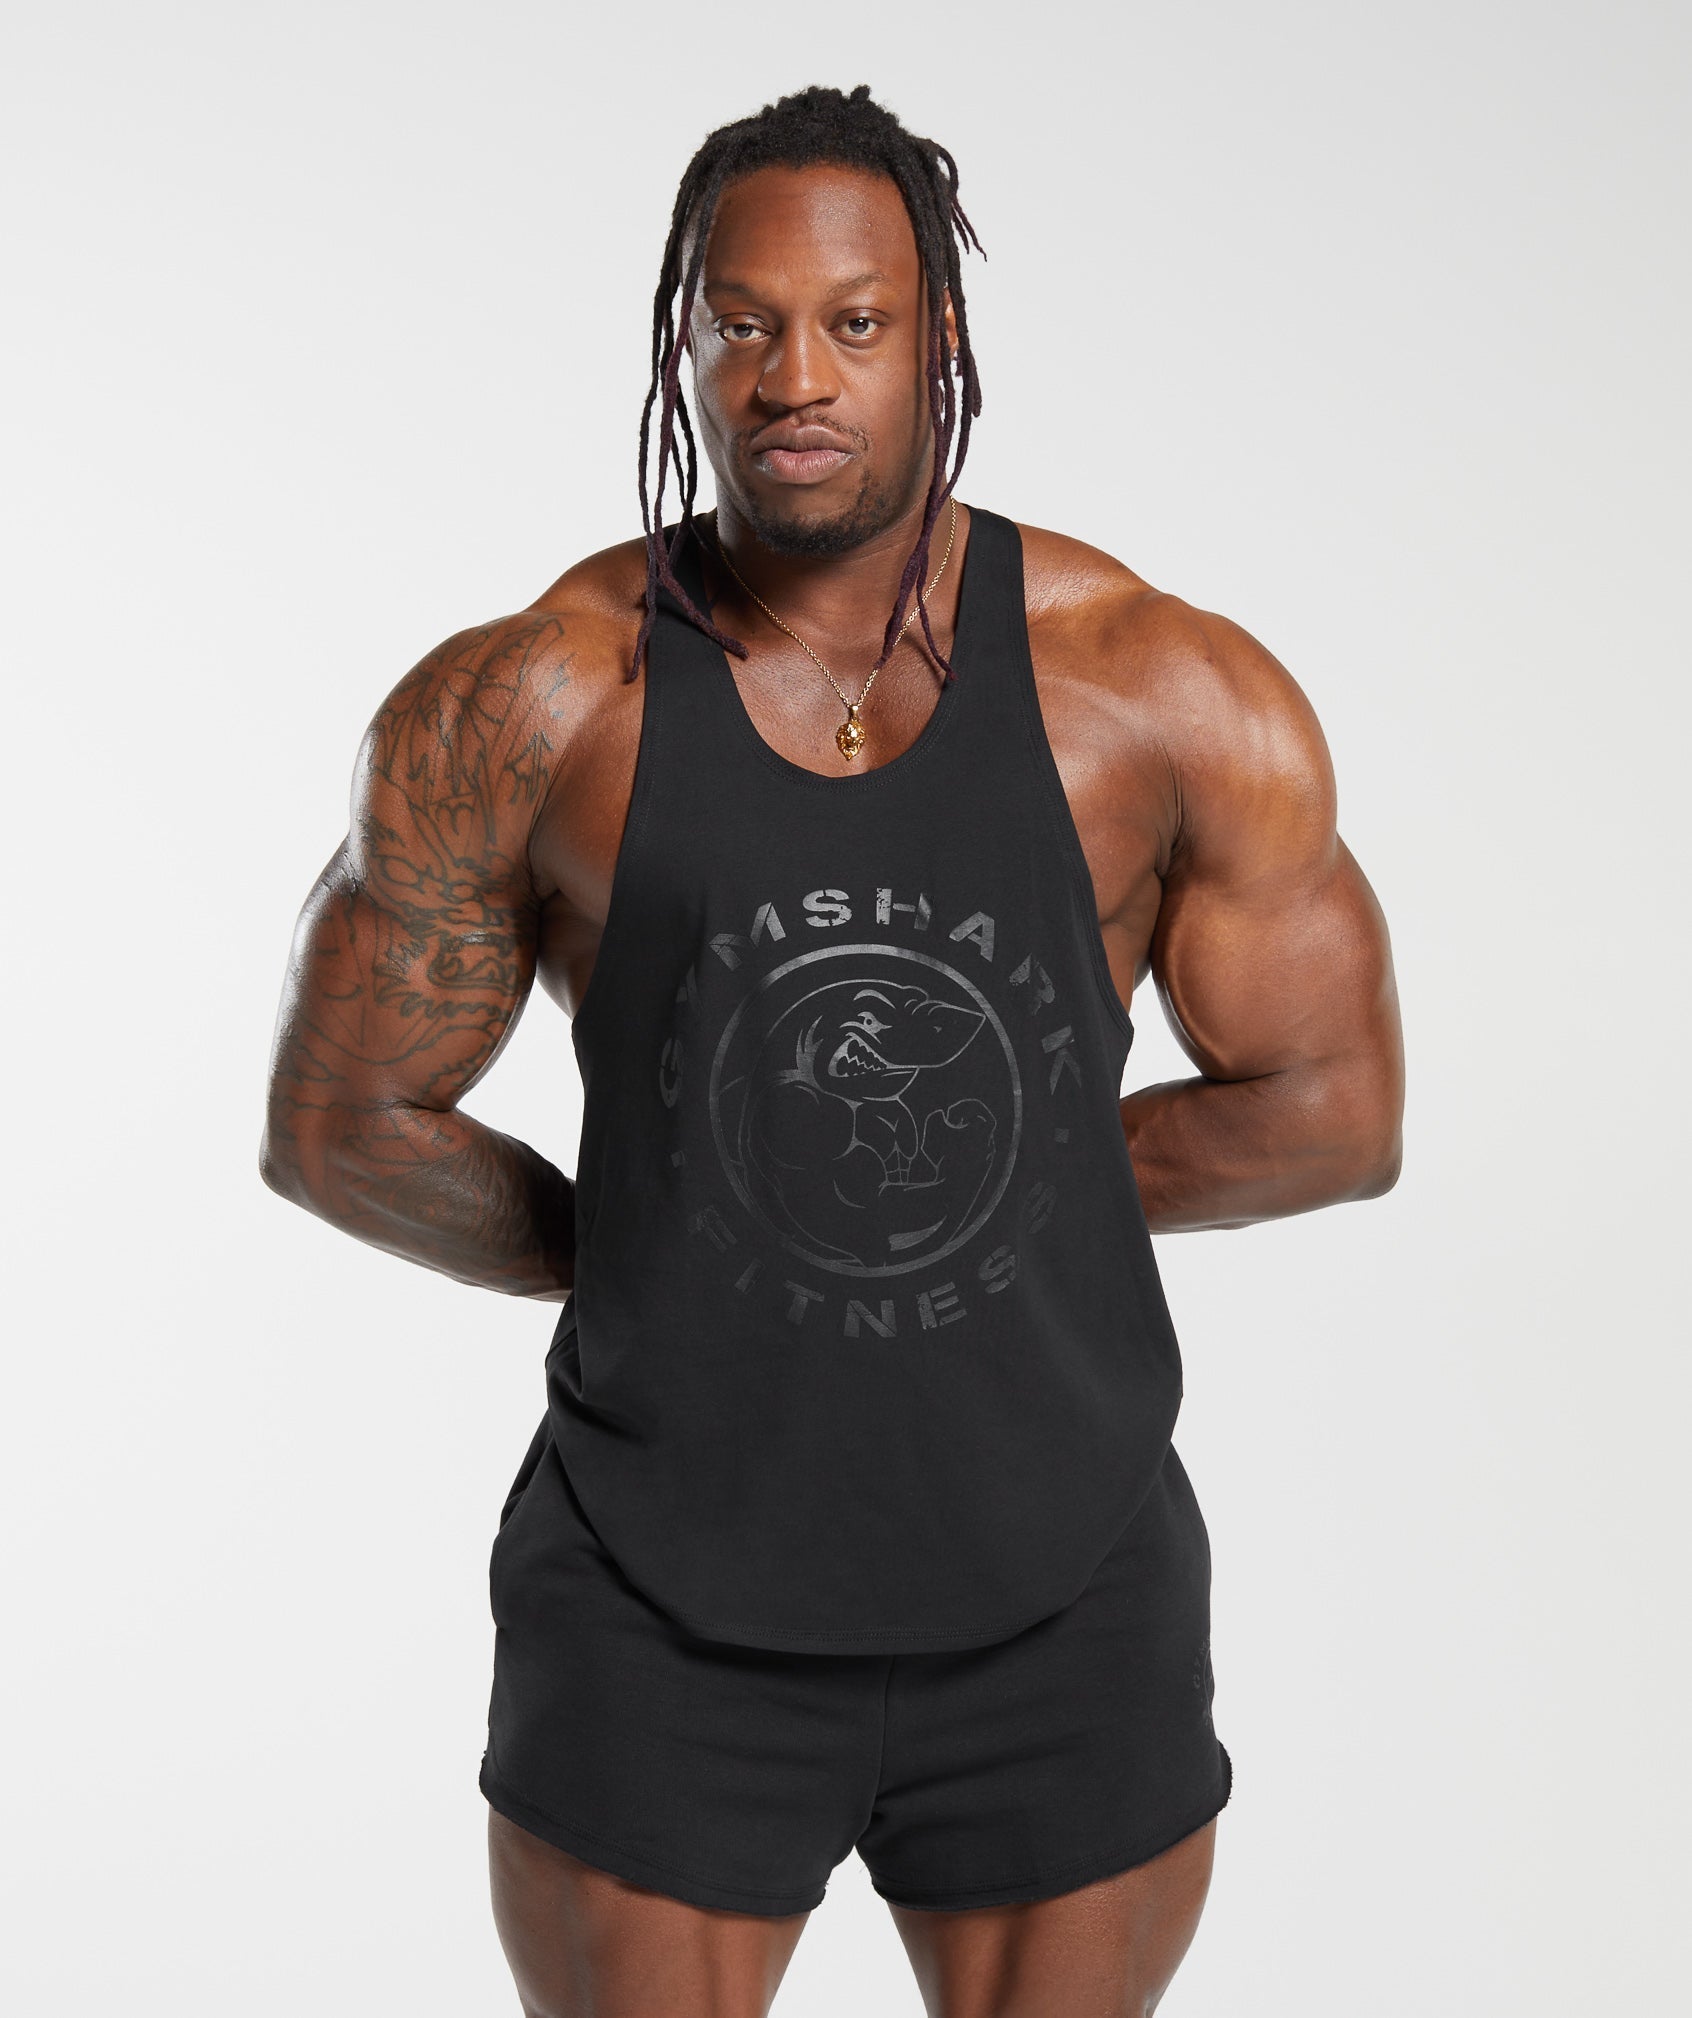 Sleeveless Vest Tank Top Mens Running Gym Top Sports Muscle T-Shirt Blouse  S-3XL 